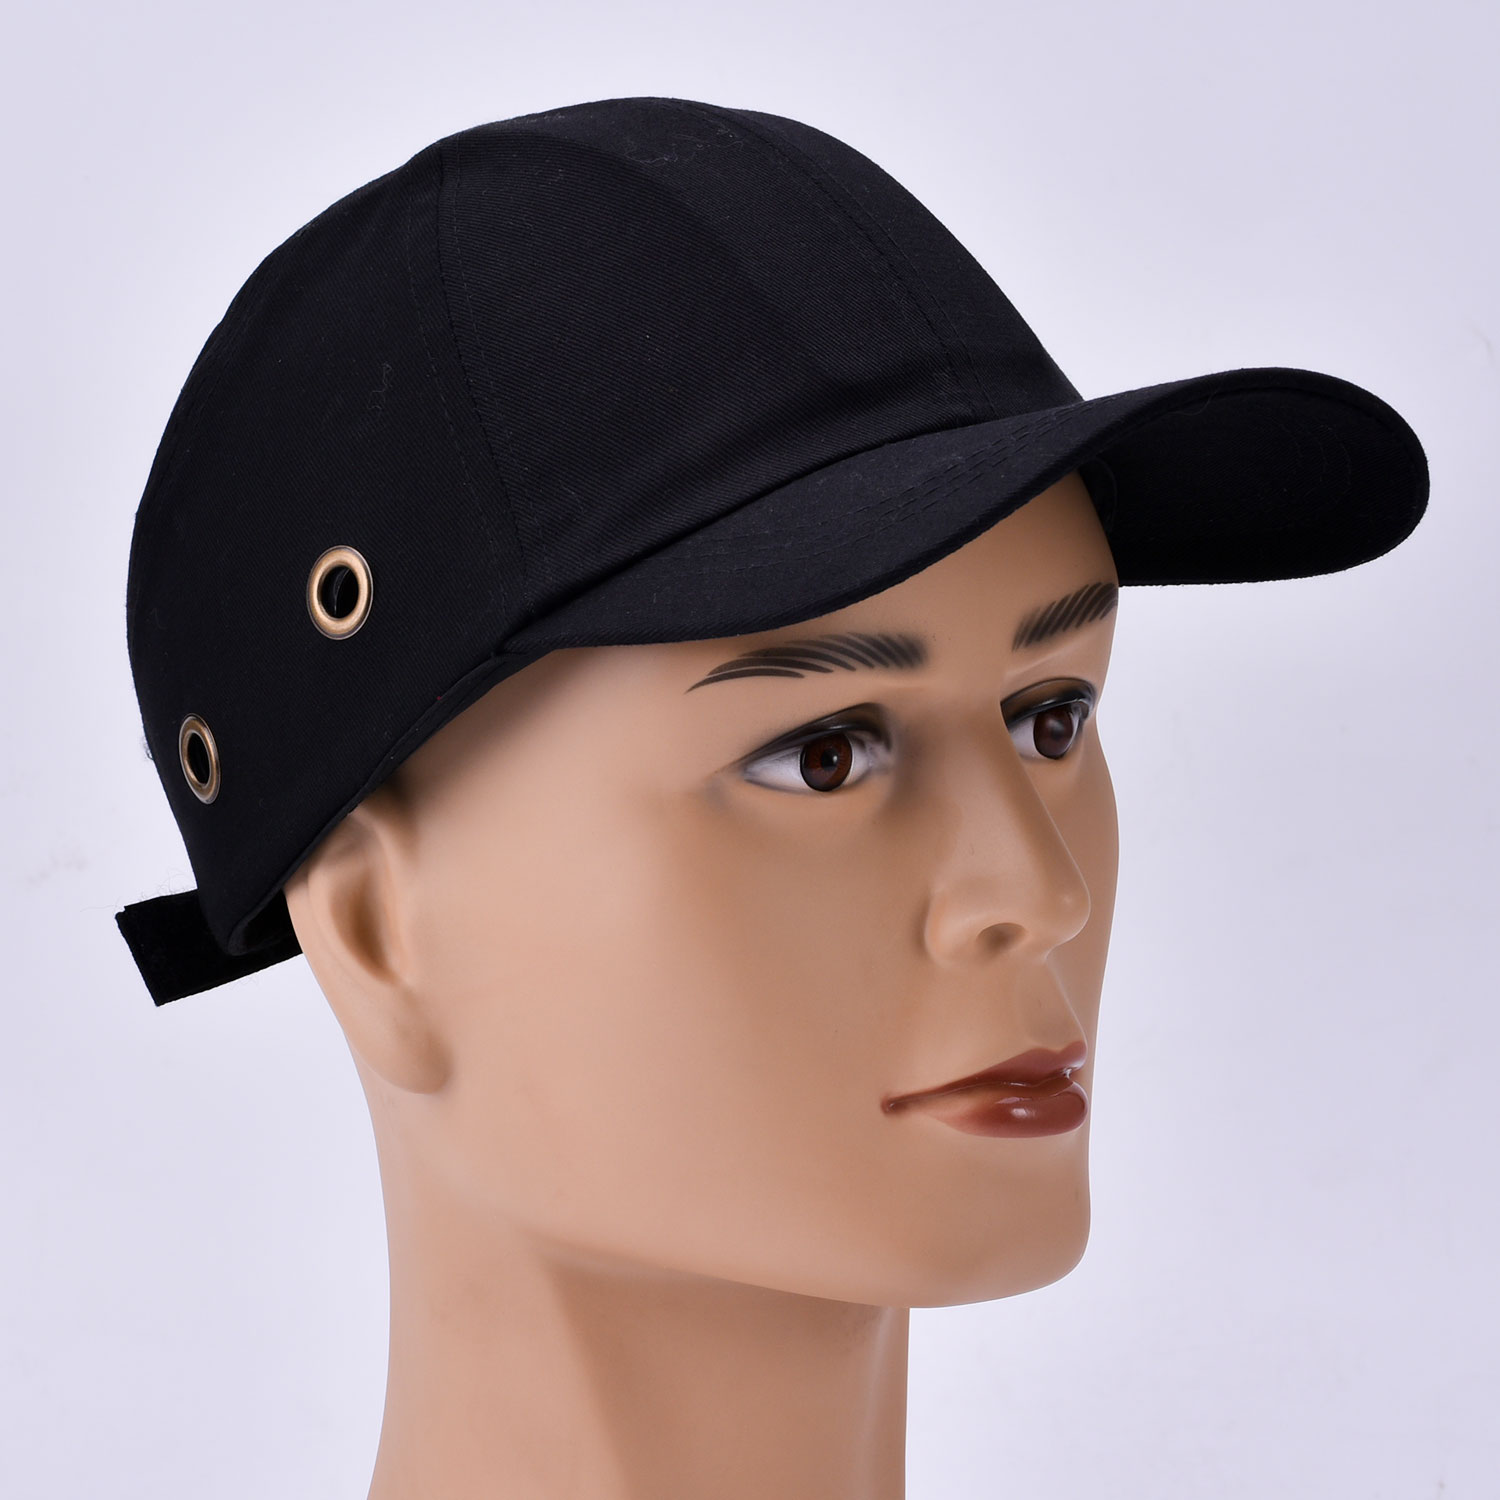 Baseball Design Safety Cap WH001 Black